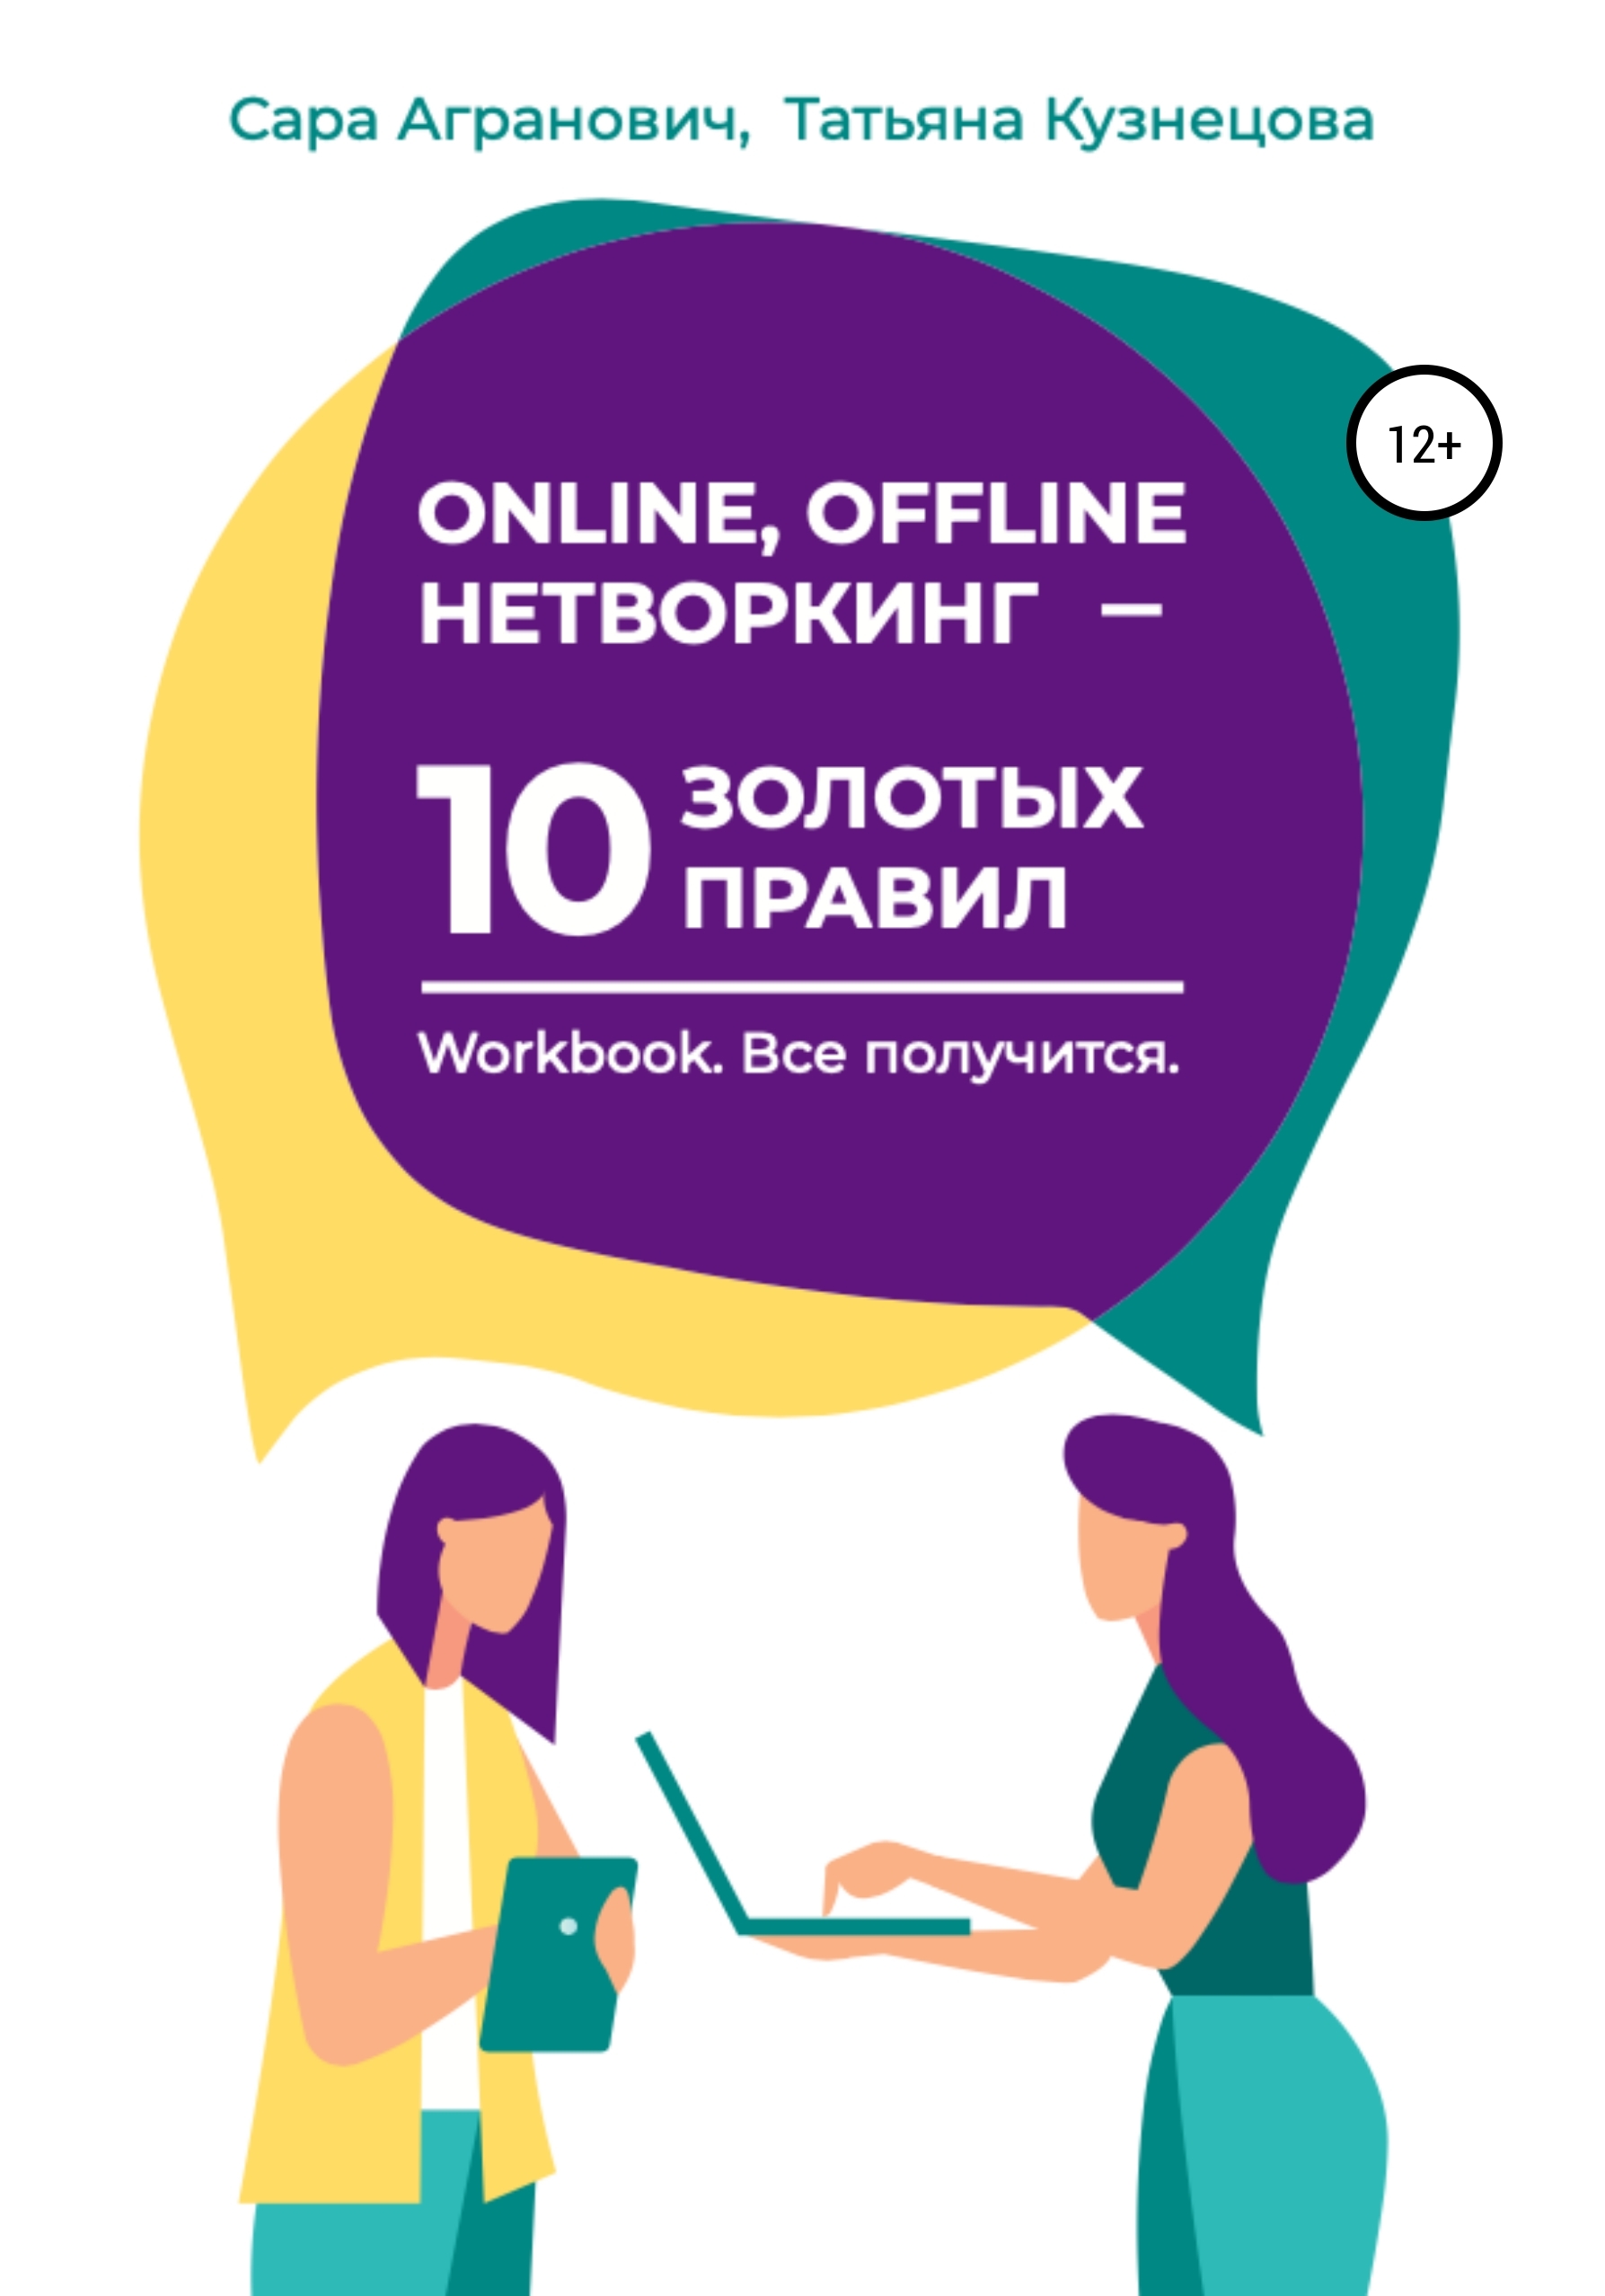 Online, offline нетворкинг – 10 золотых правил